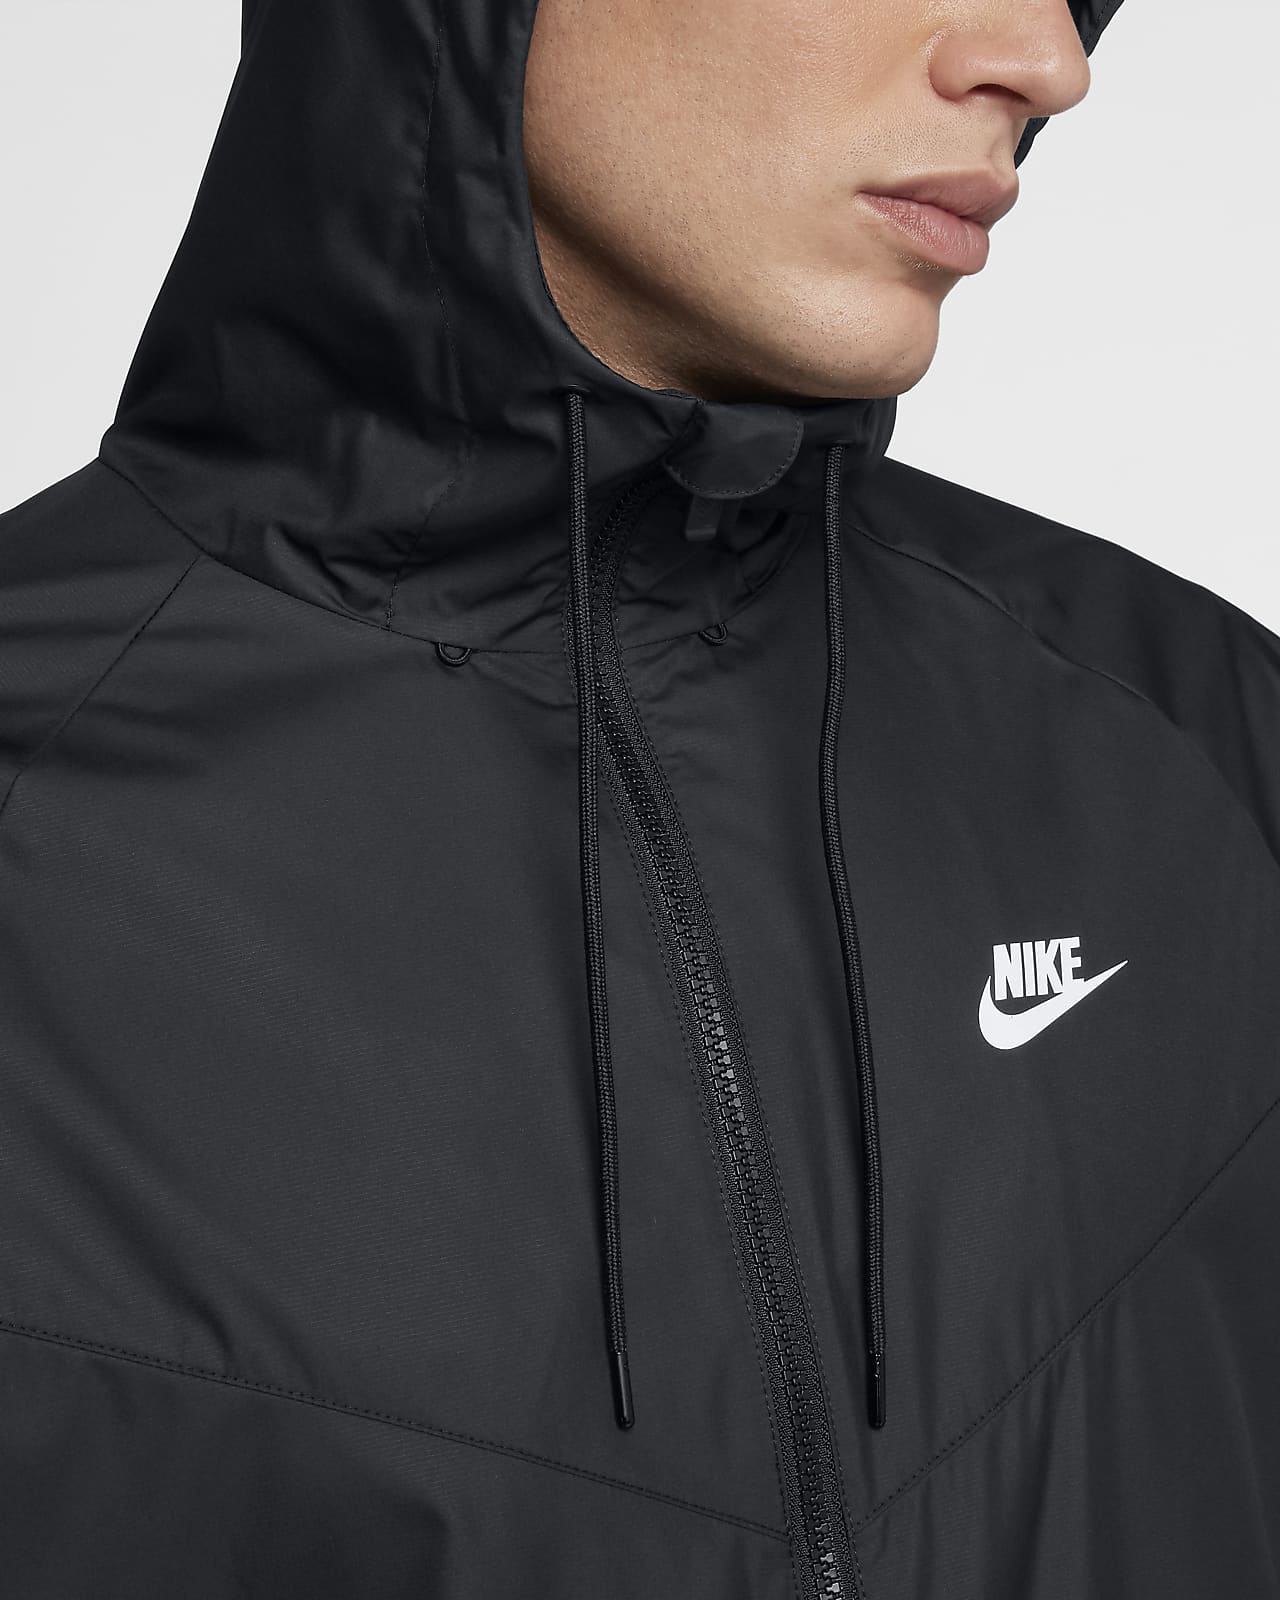 Per ongeluk samenzwering Parel Nike Sportswear Windrunner Men's Jacket. Nike.com